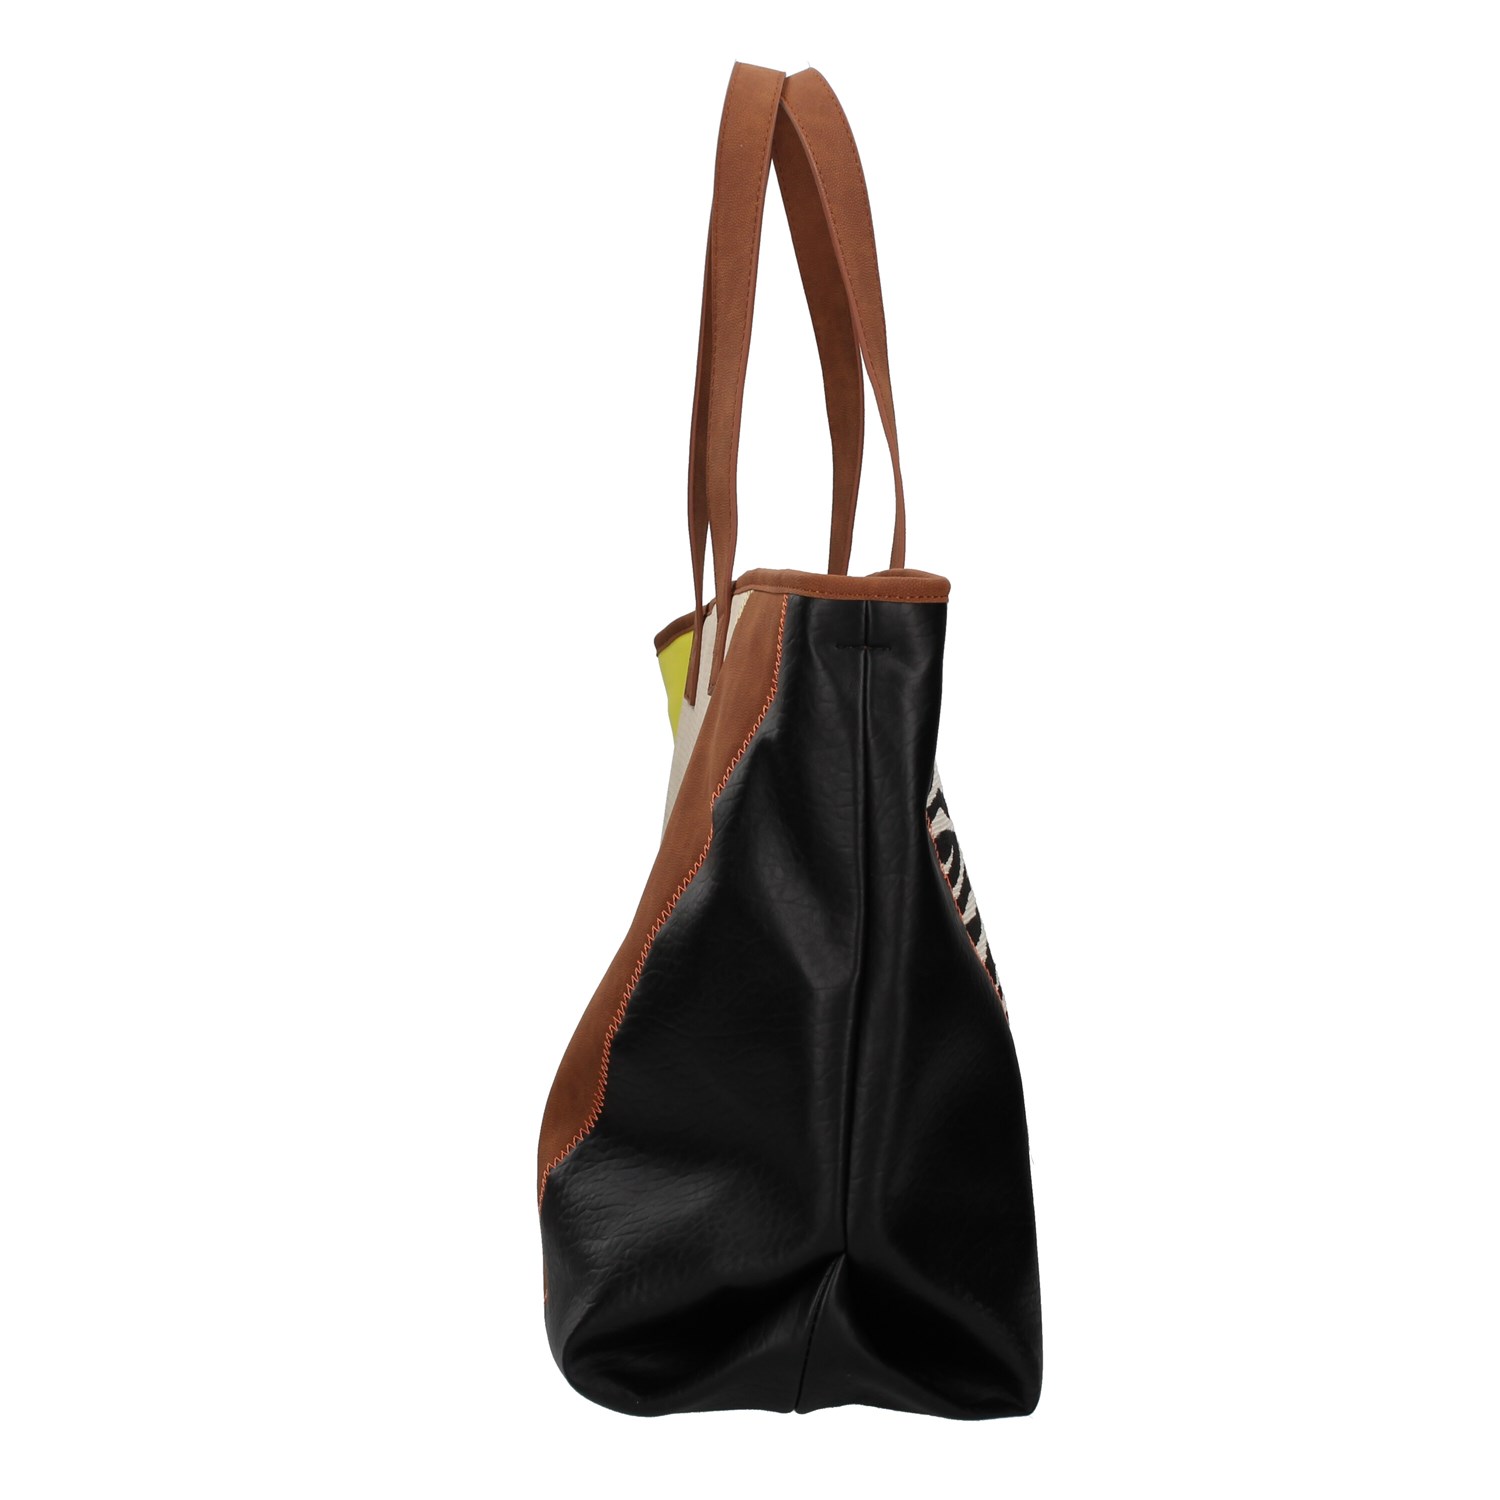 Desigual Bags Accessories Shopping BROWN 22SAXP42